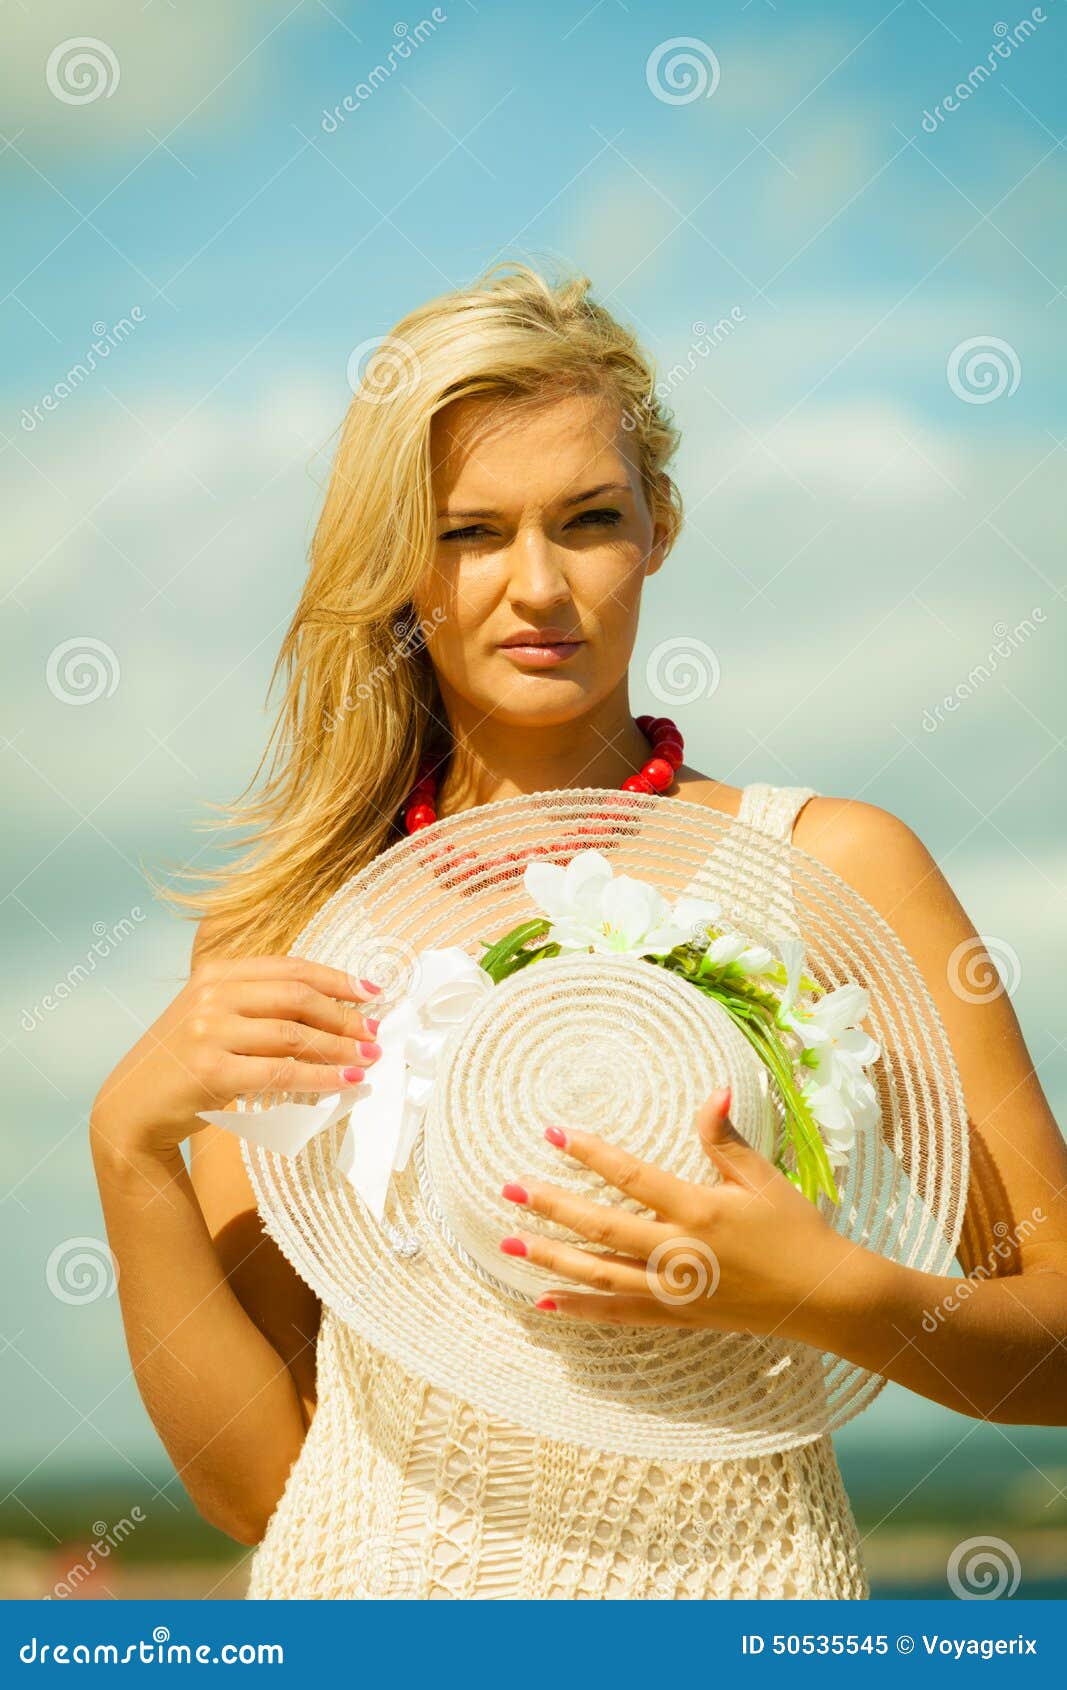 Beautiful Blonde Girl In Hat On Beach Summertime Stock Image Image Of Walk Coast 50535545